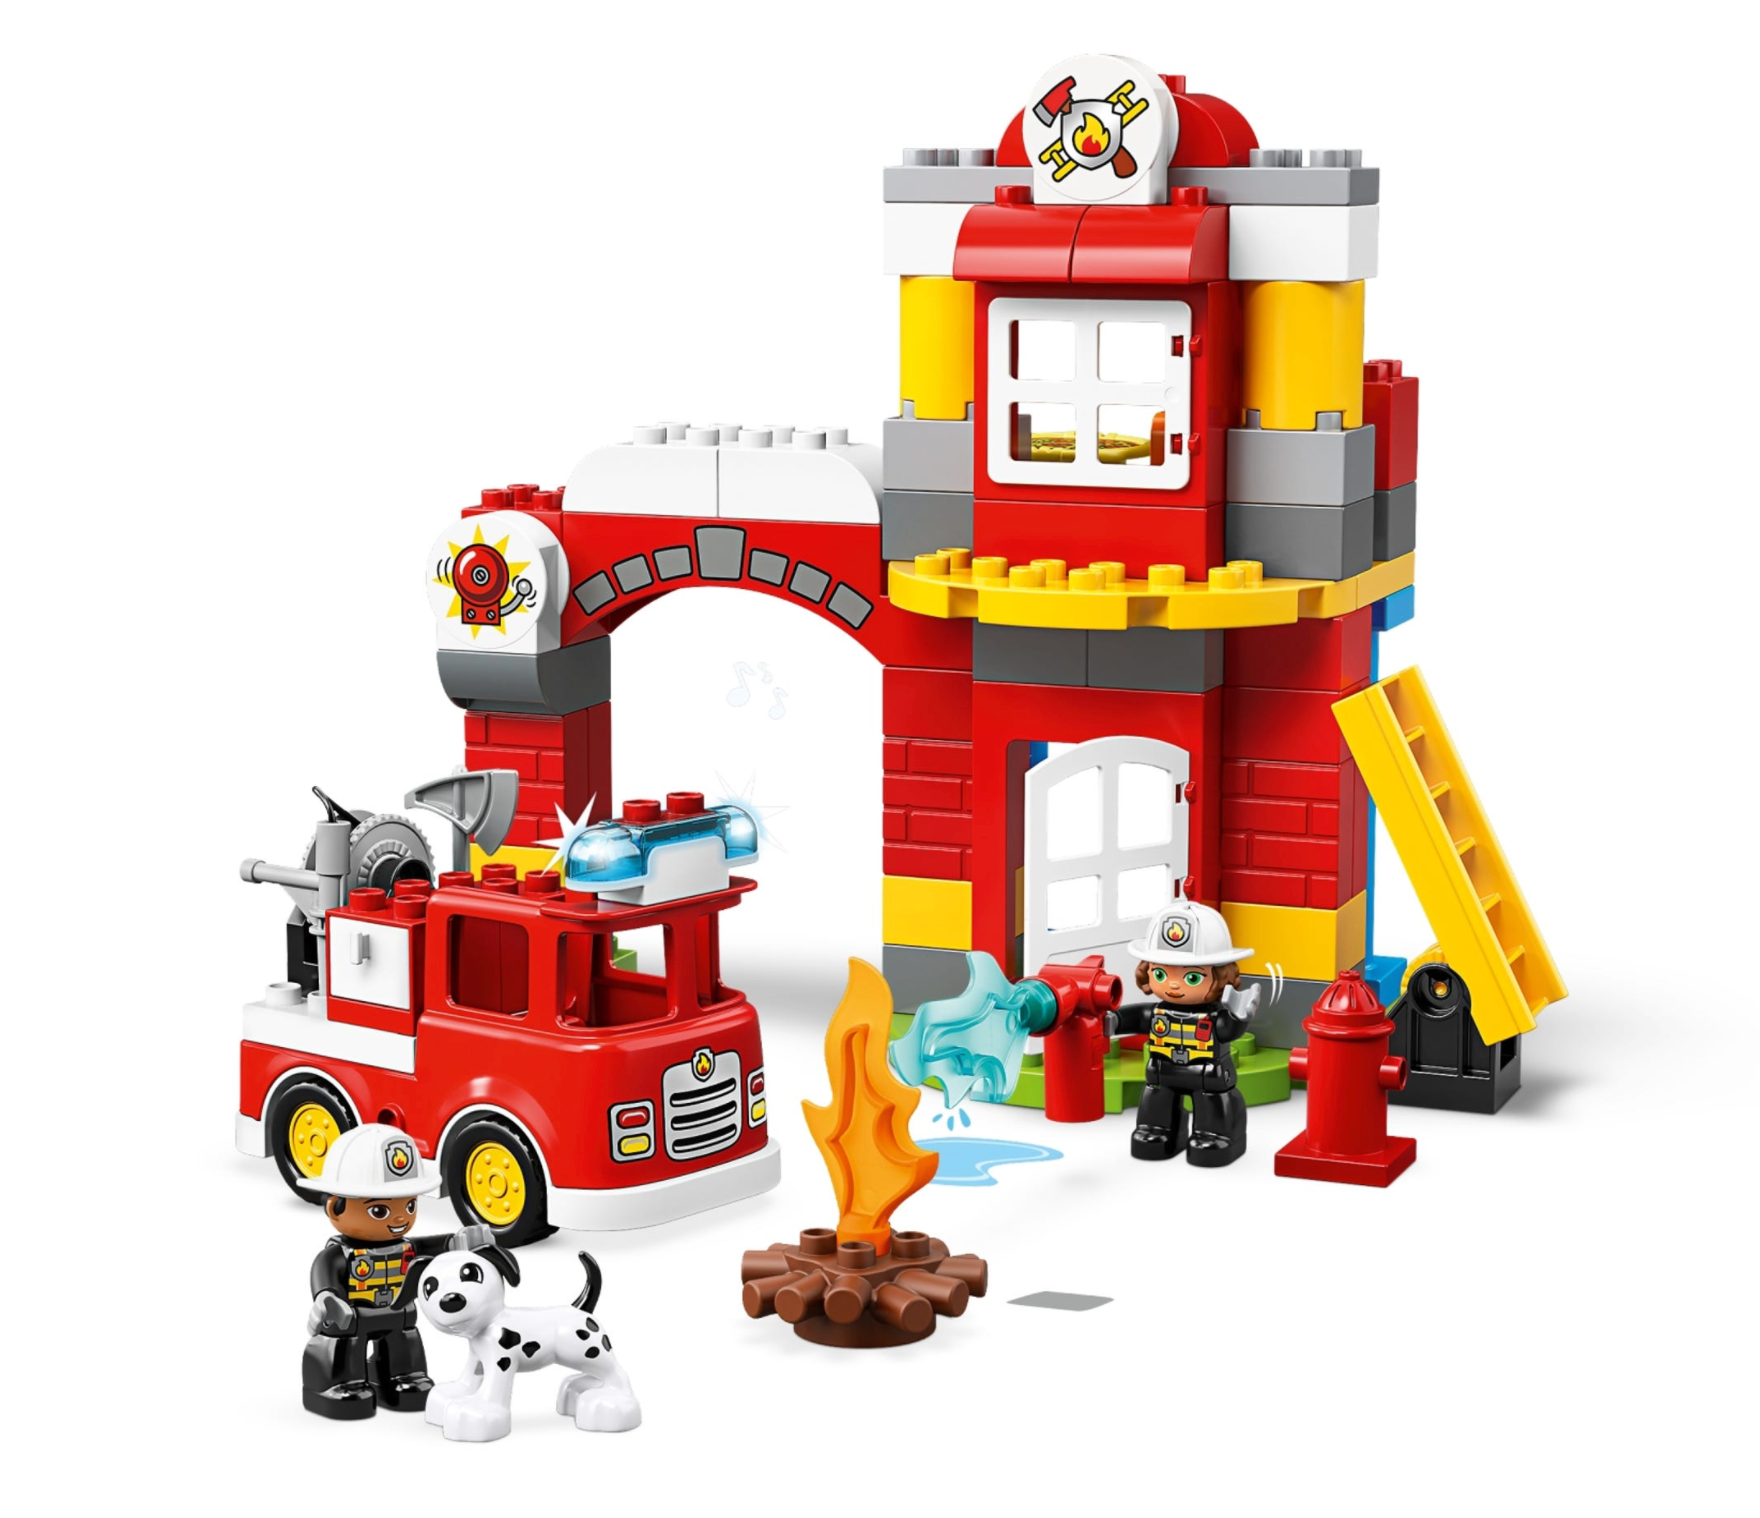 LEGO: DUPLO - Fire Station